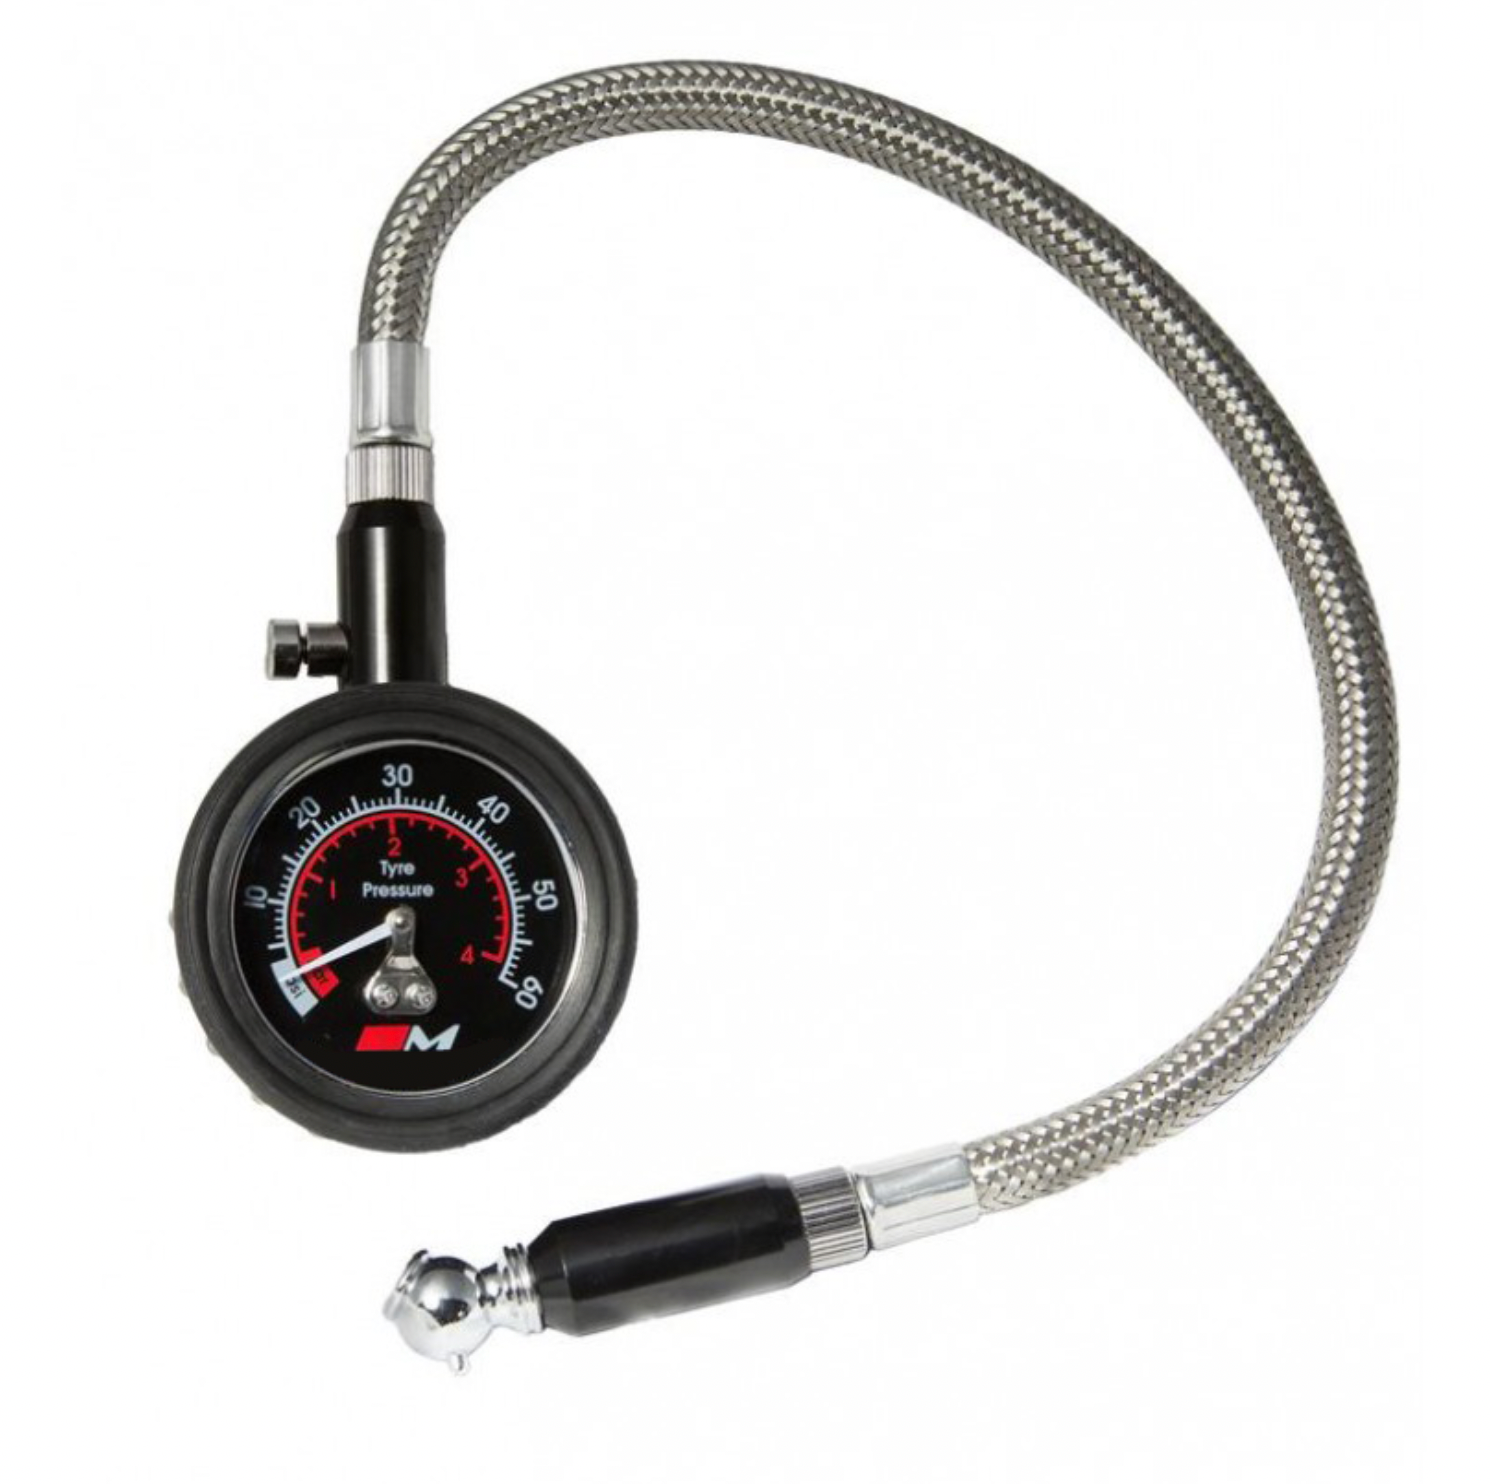 Tyre Pressure Gauge - Analogue 0-60psi